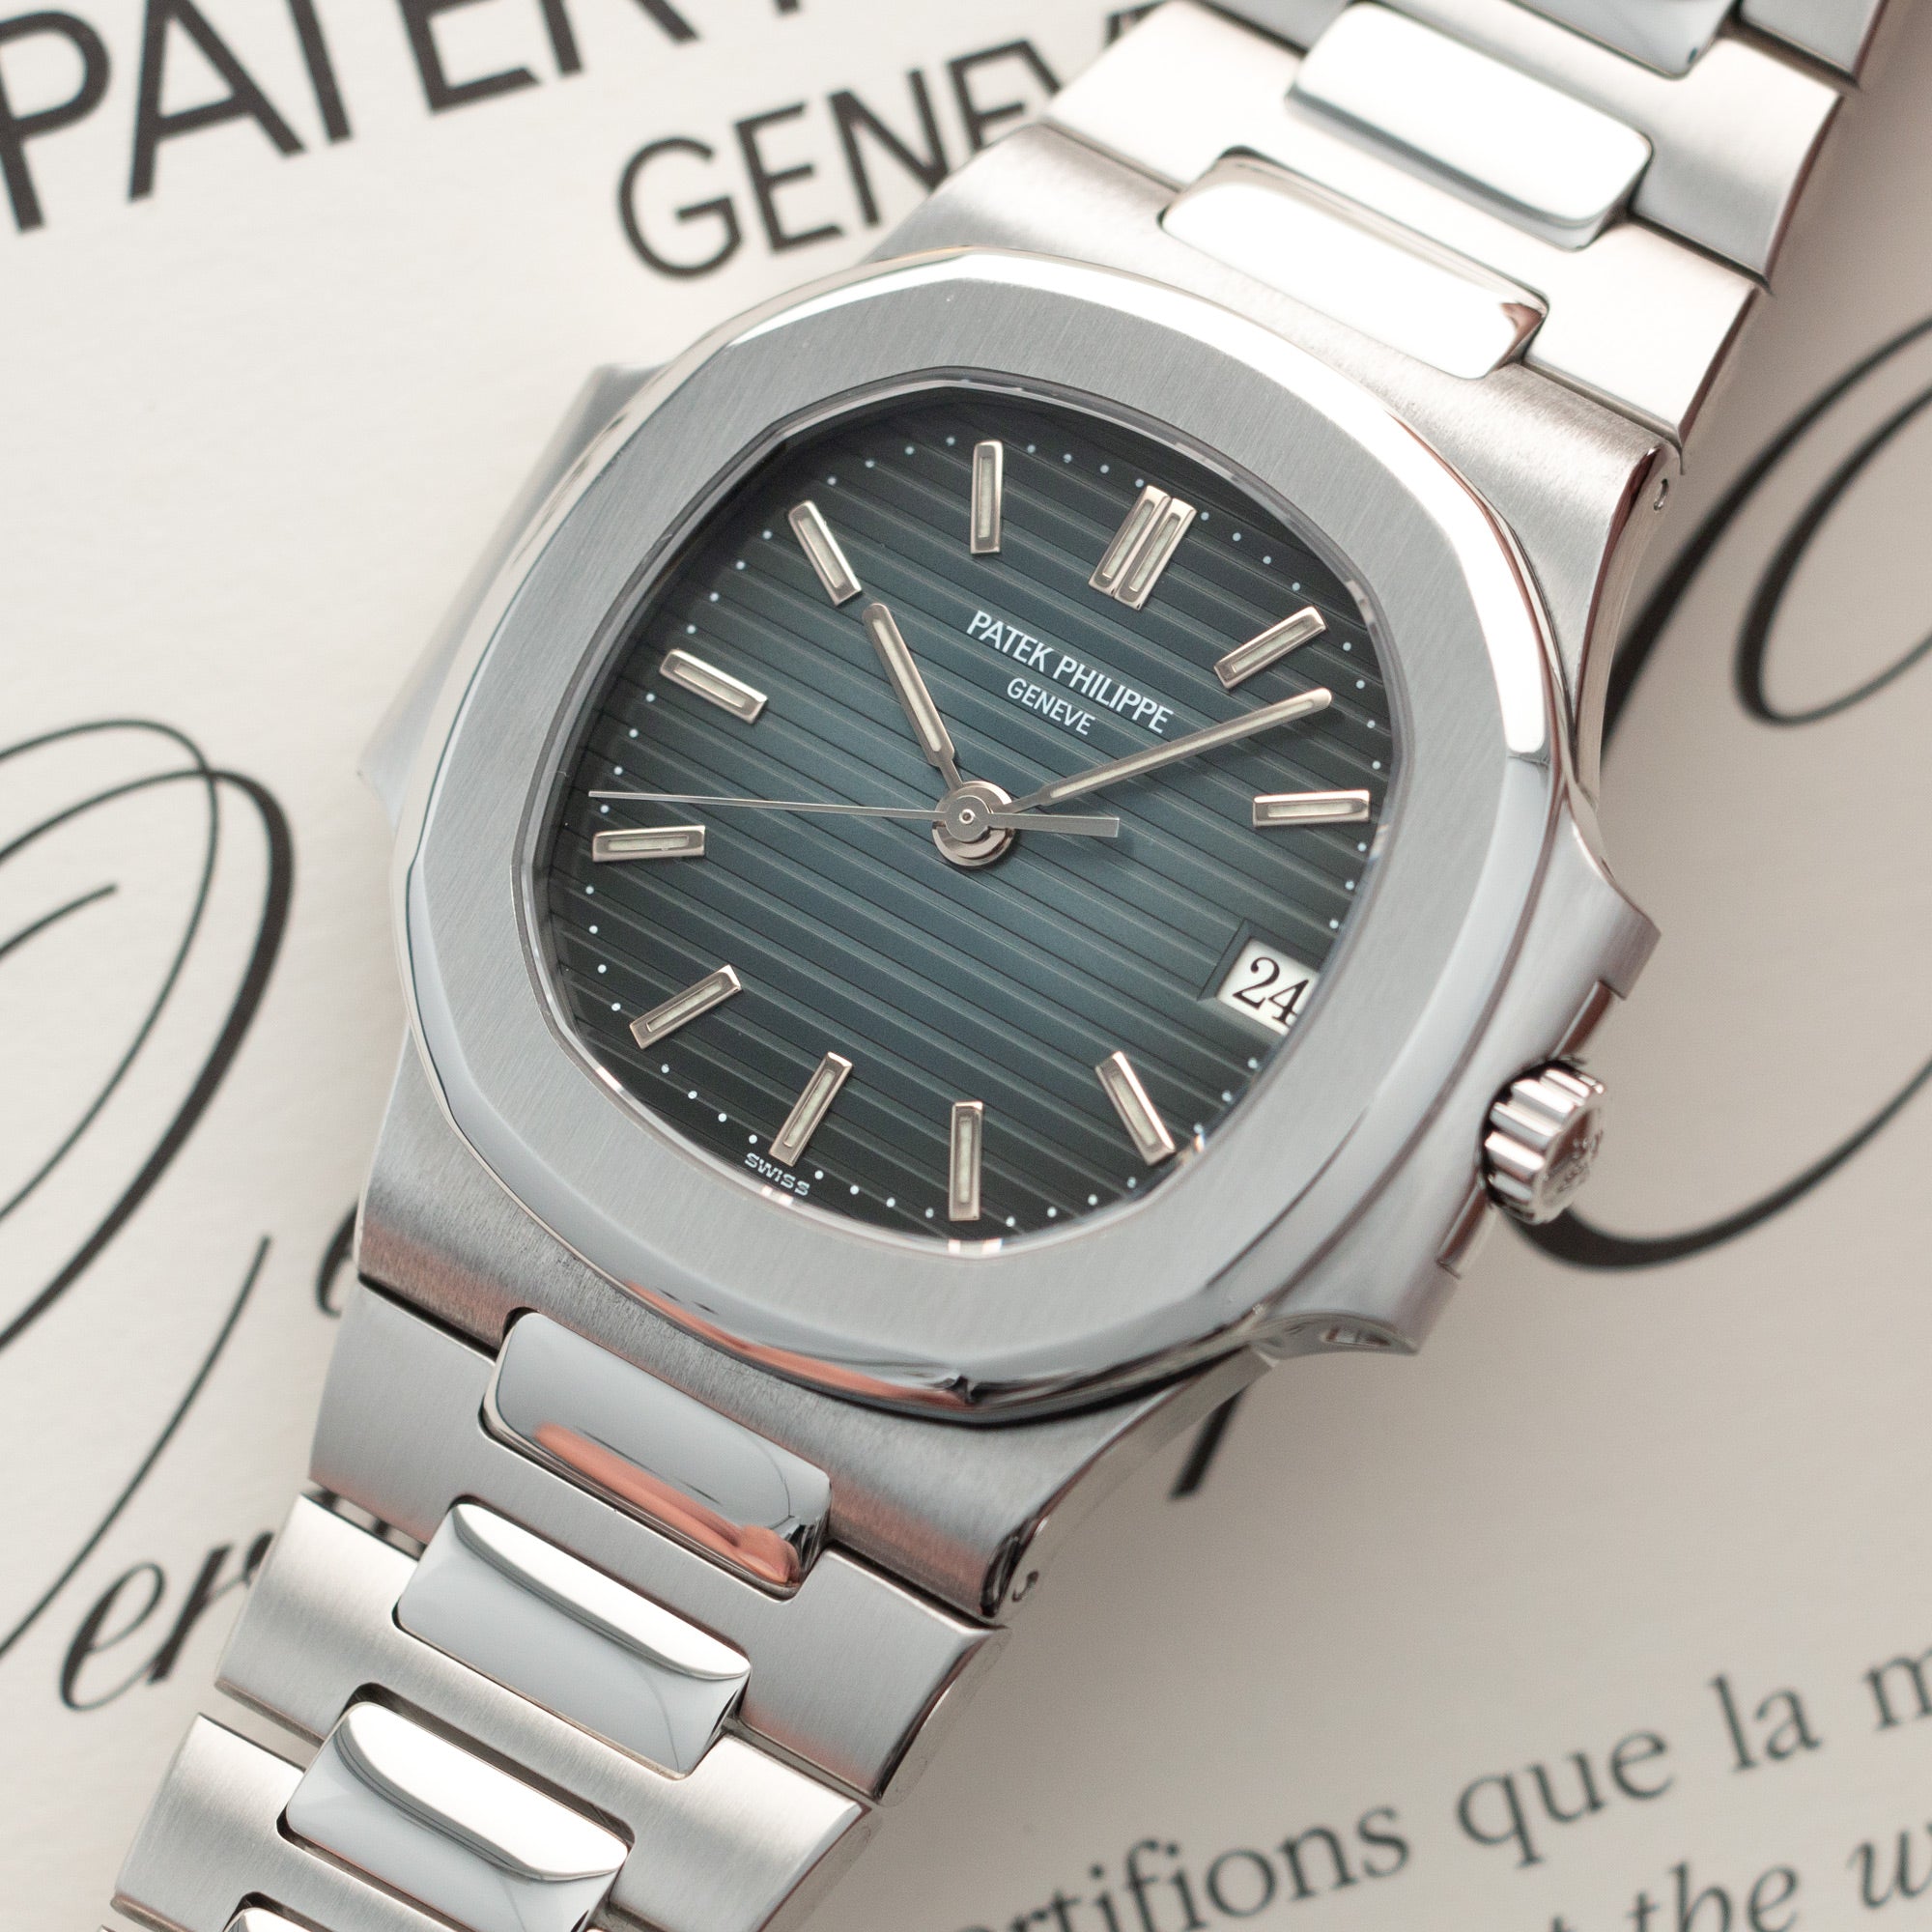 Patek Philippe - Patek Philippe Nautilus, Ref. 3800 with Original Paper and Hangtag - The Keystone Watches